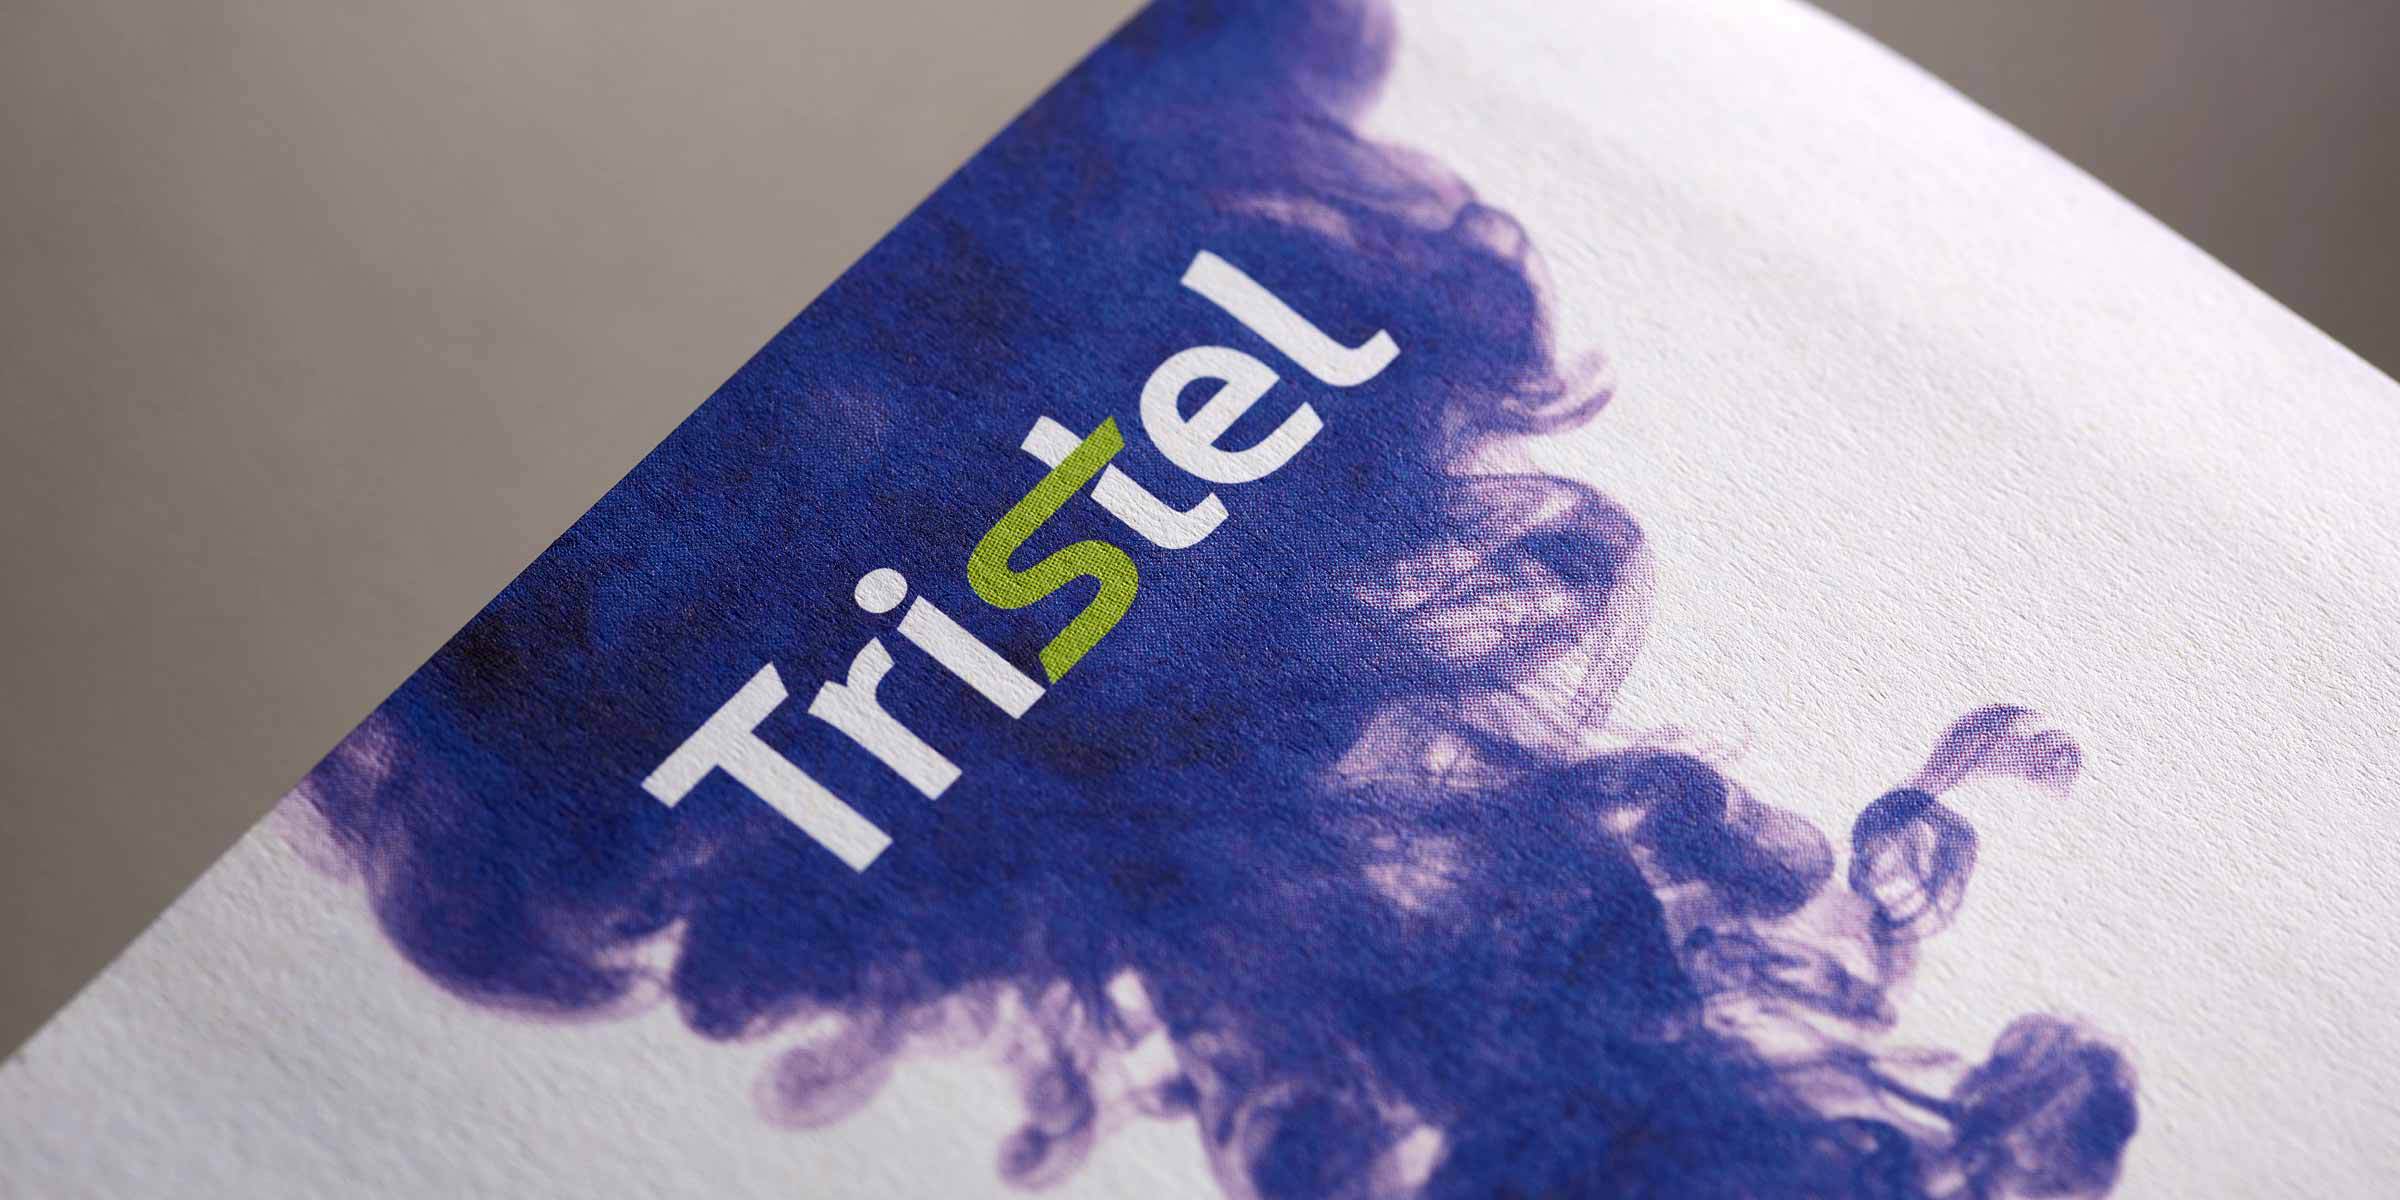 Tristel logo on purple background